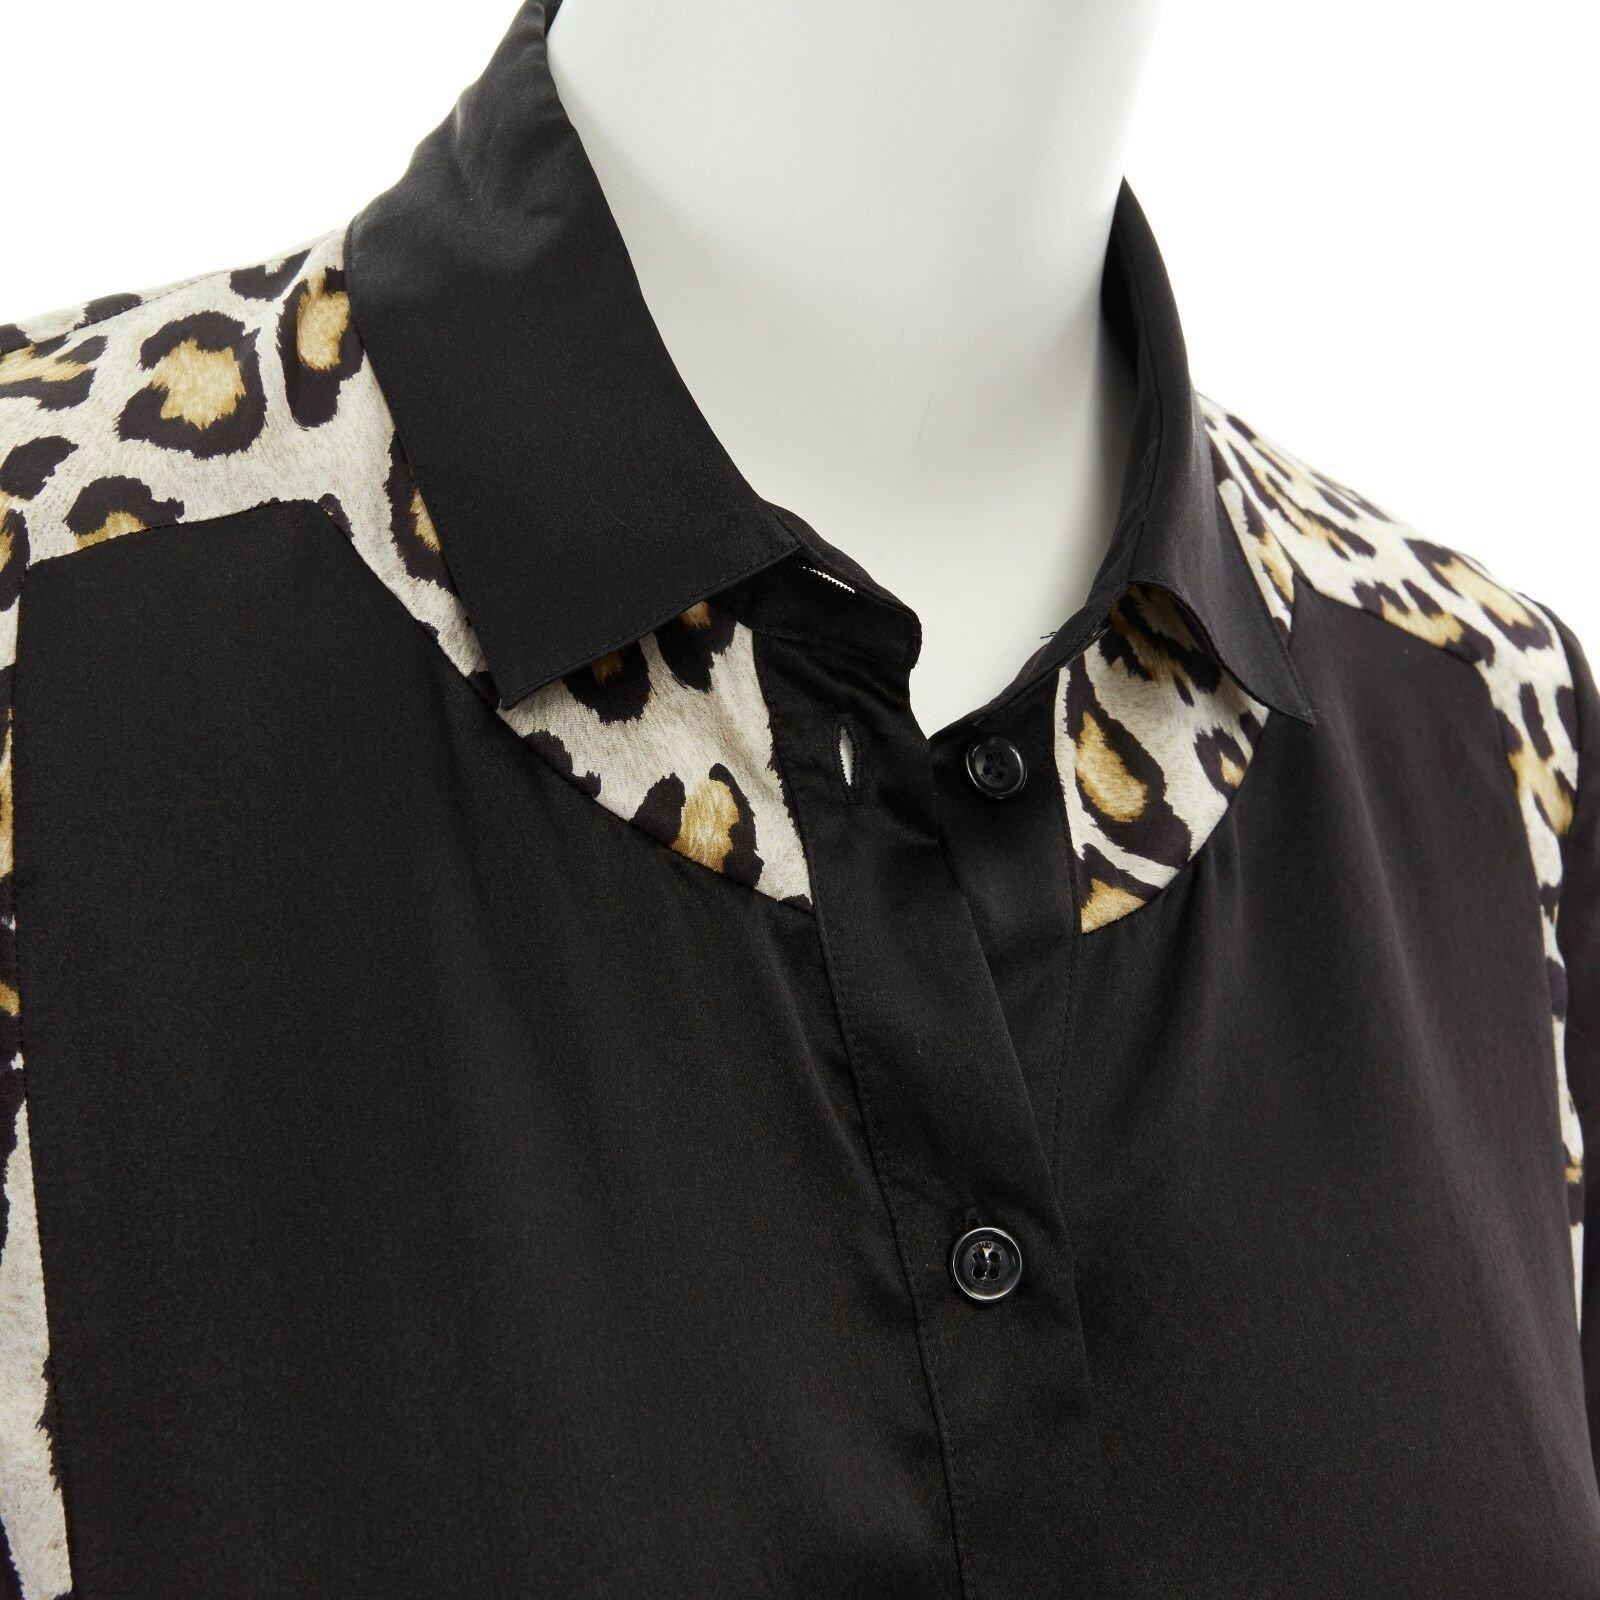 JUST CAVALLI 100% silk black leopard colorblocked button front shirt IT40 S For Sale 1